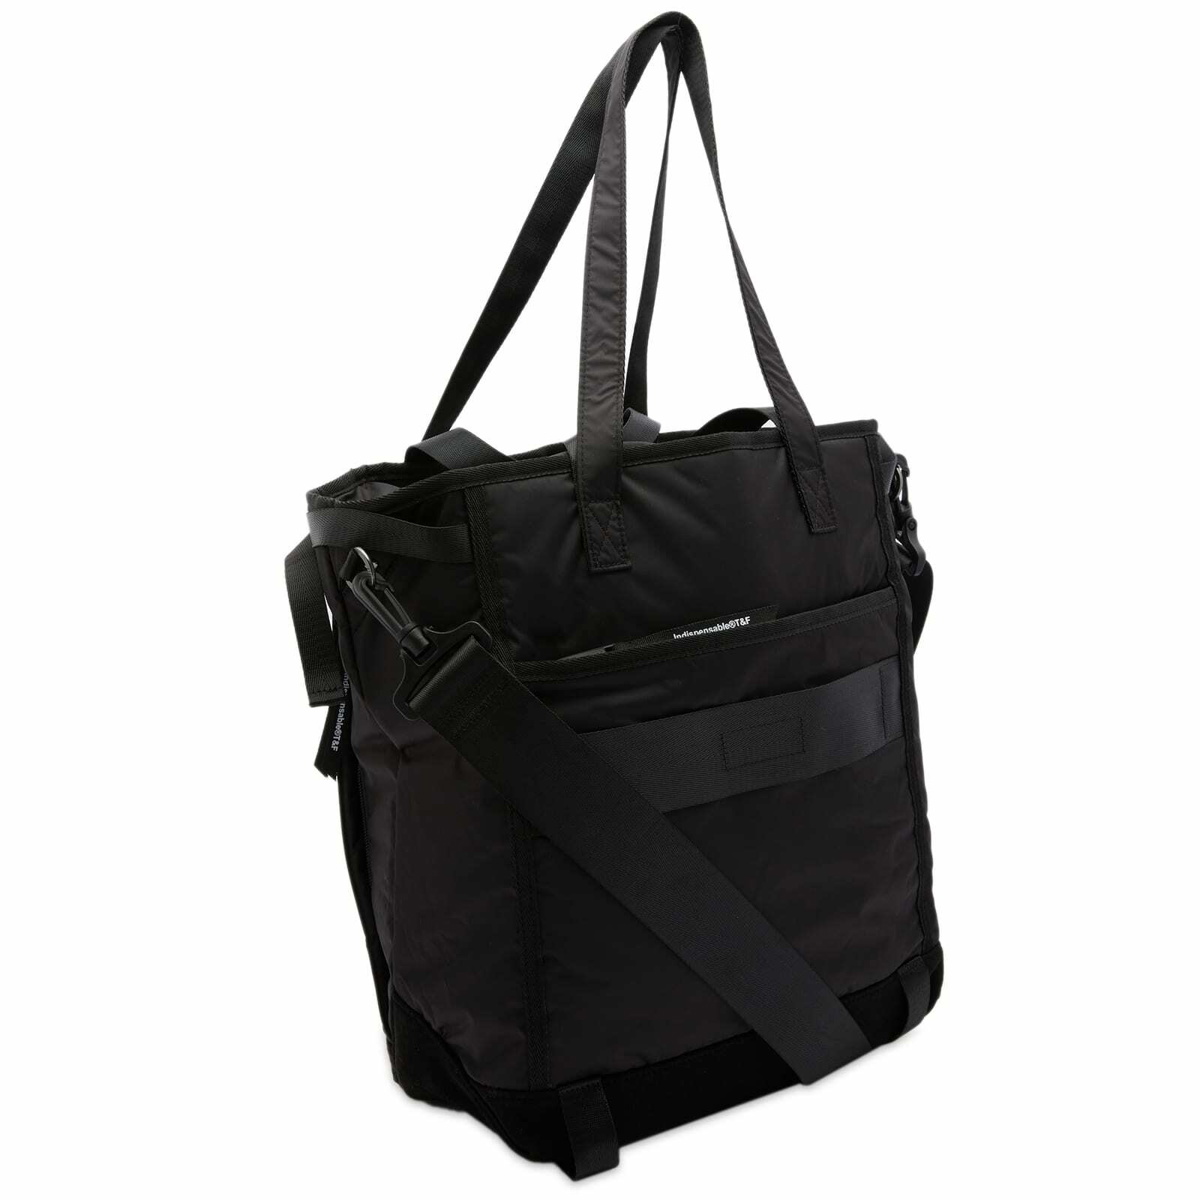 Indispensable Indispensible Hangger Econyl 3-Way Tote Bag in Black ...